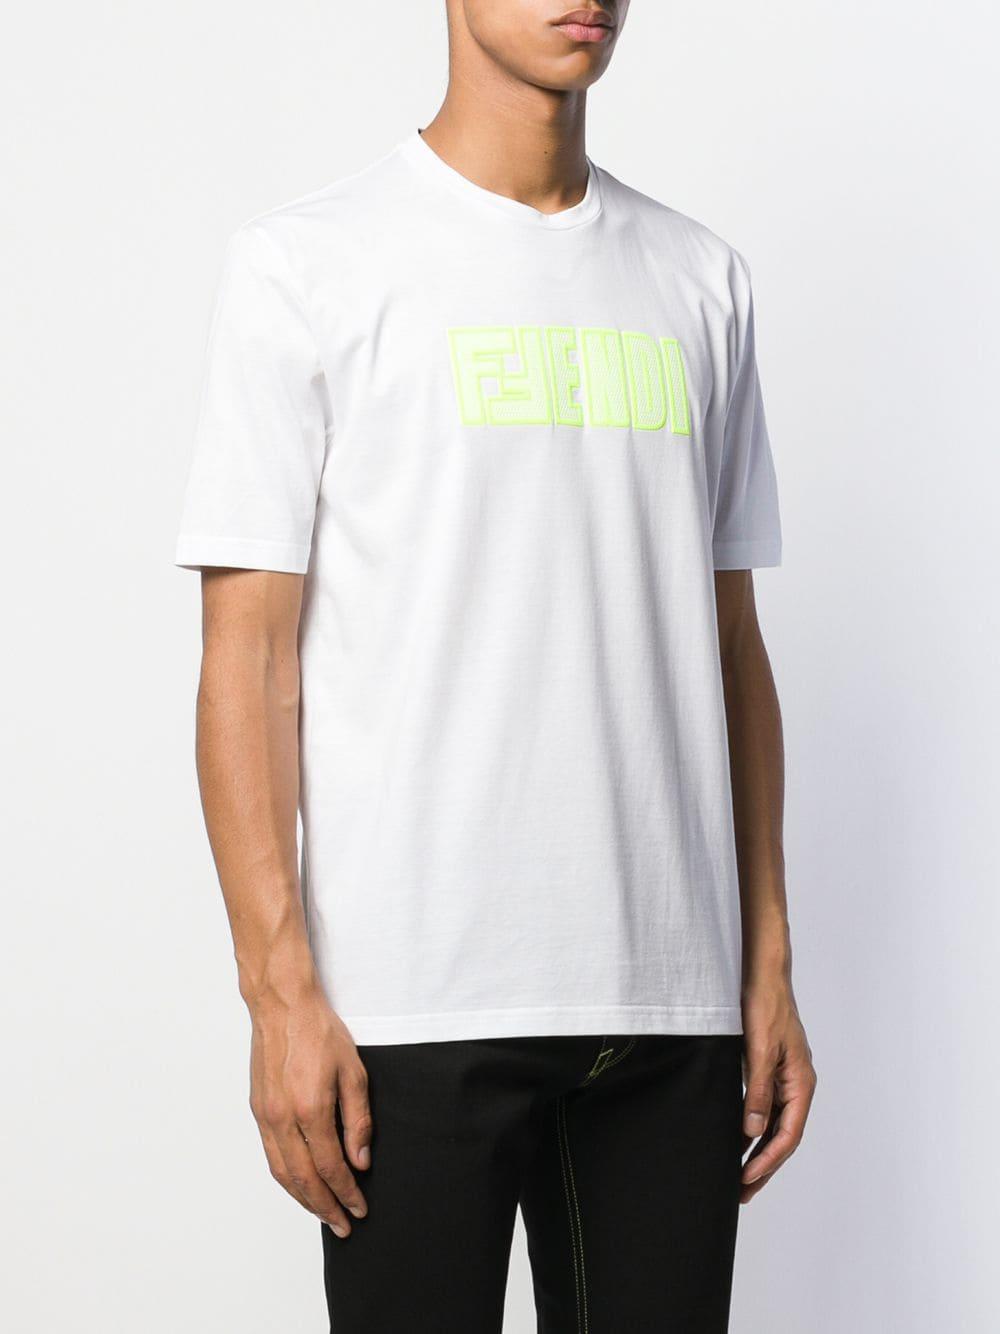 Fendi Cotton Bag Bug Eyes Motif T-shirt in White for Men - Lyst